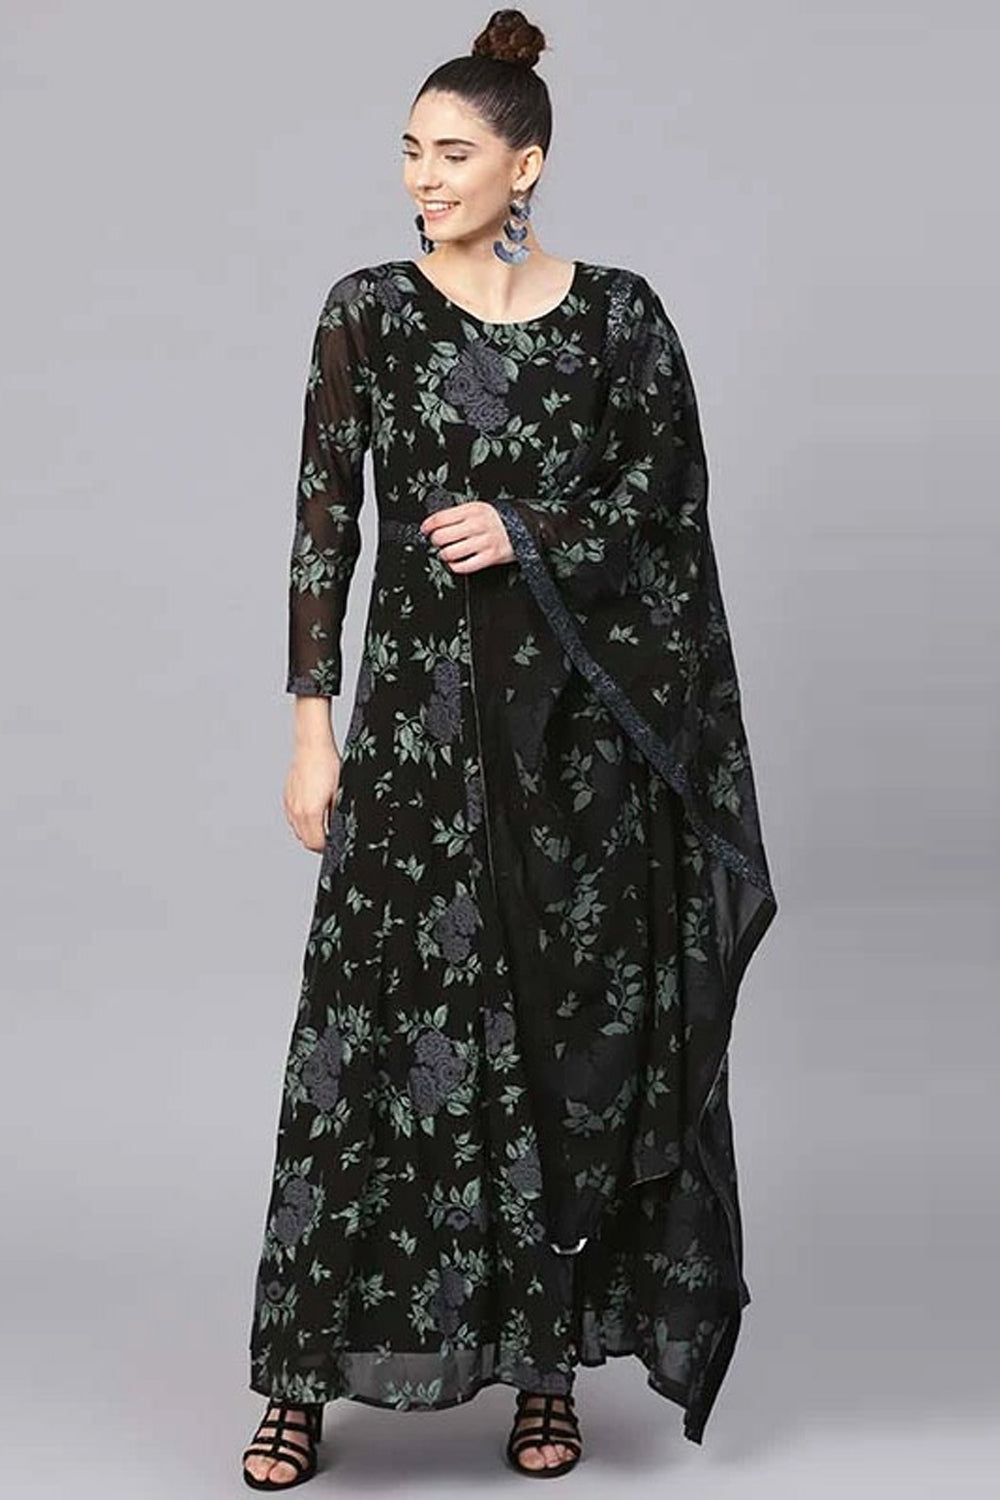 Ladies Black Floral Print Poly Crepe Long Dress at Rs 350 | Synthetic Fibre  Kurti in Surat | ID: 23380644233